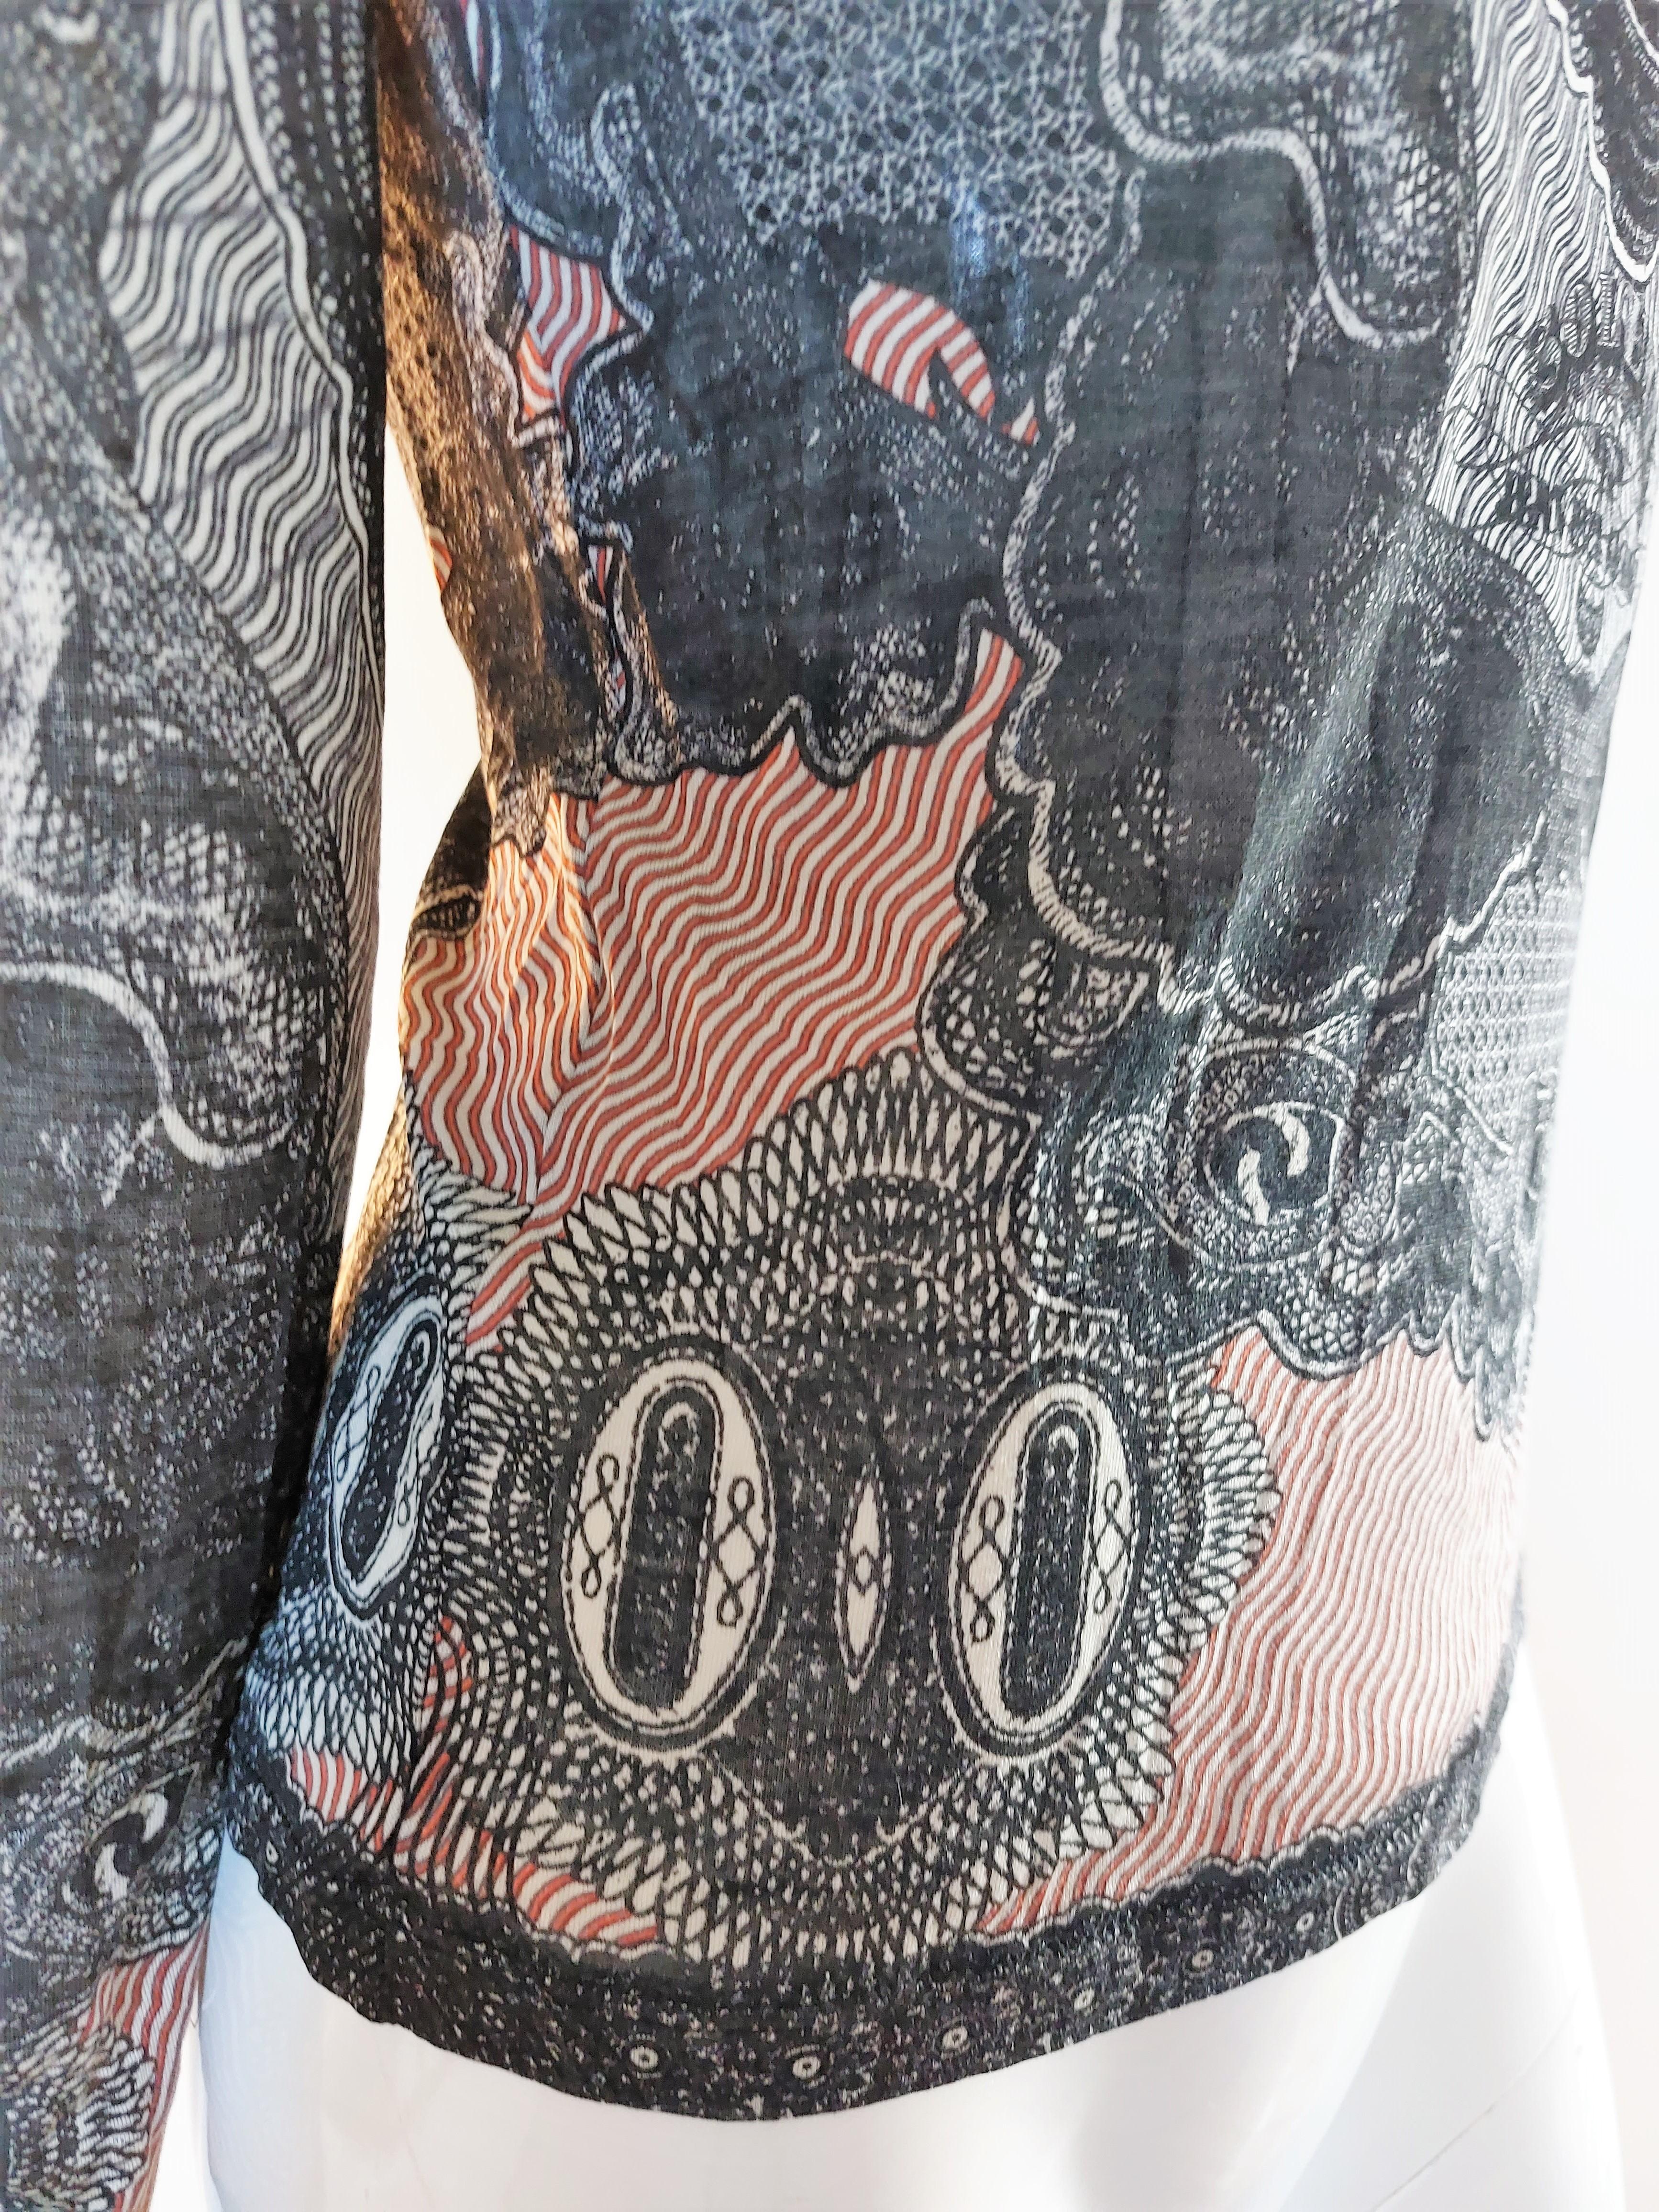 Jean Paul Gaultier Bill Banknote Money Mesh Tattoo 1994 S/S Unisex Top Shirt Tee For Sale 4